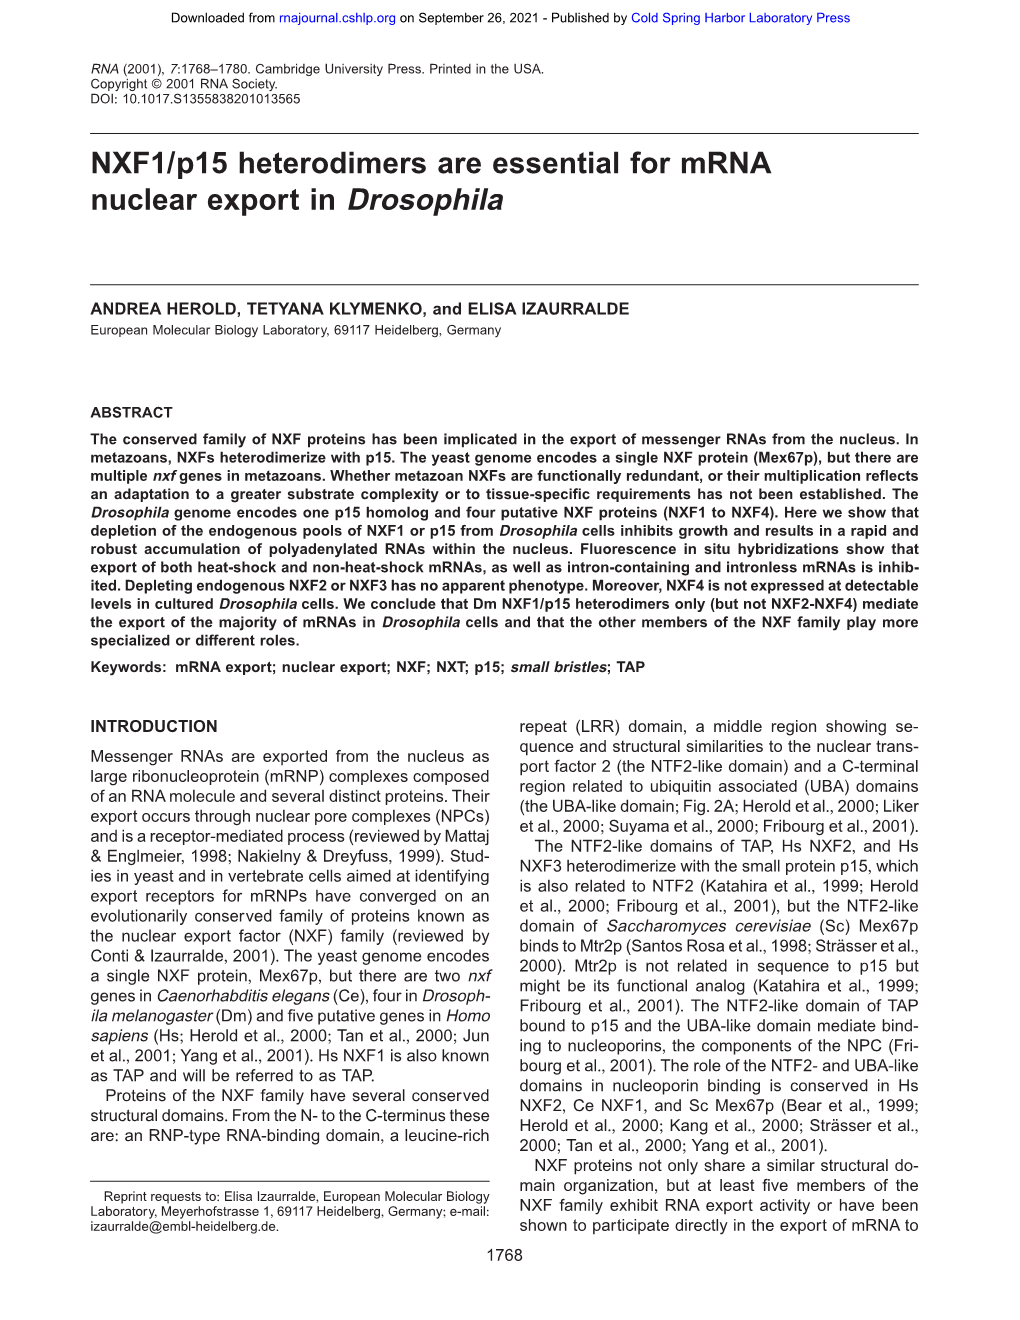 NXF1/P15 Heterodimers Are Essential for Mrna Nuclear Export in Drosophila